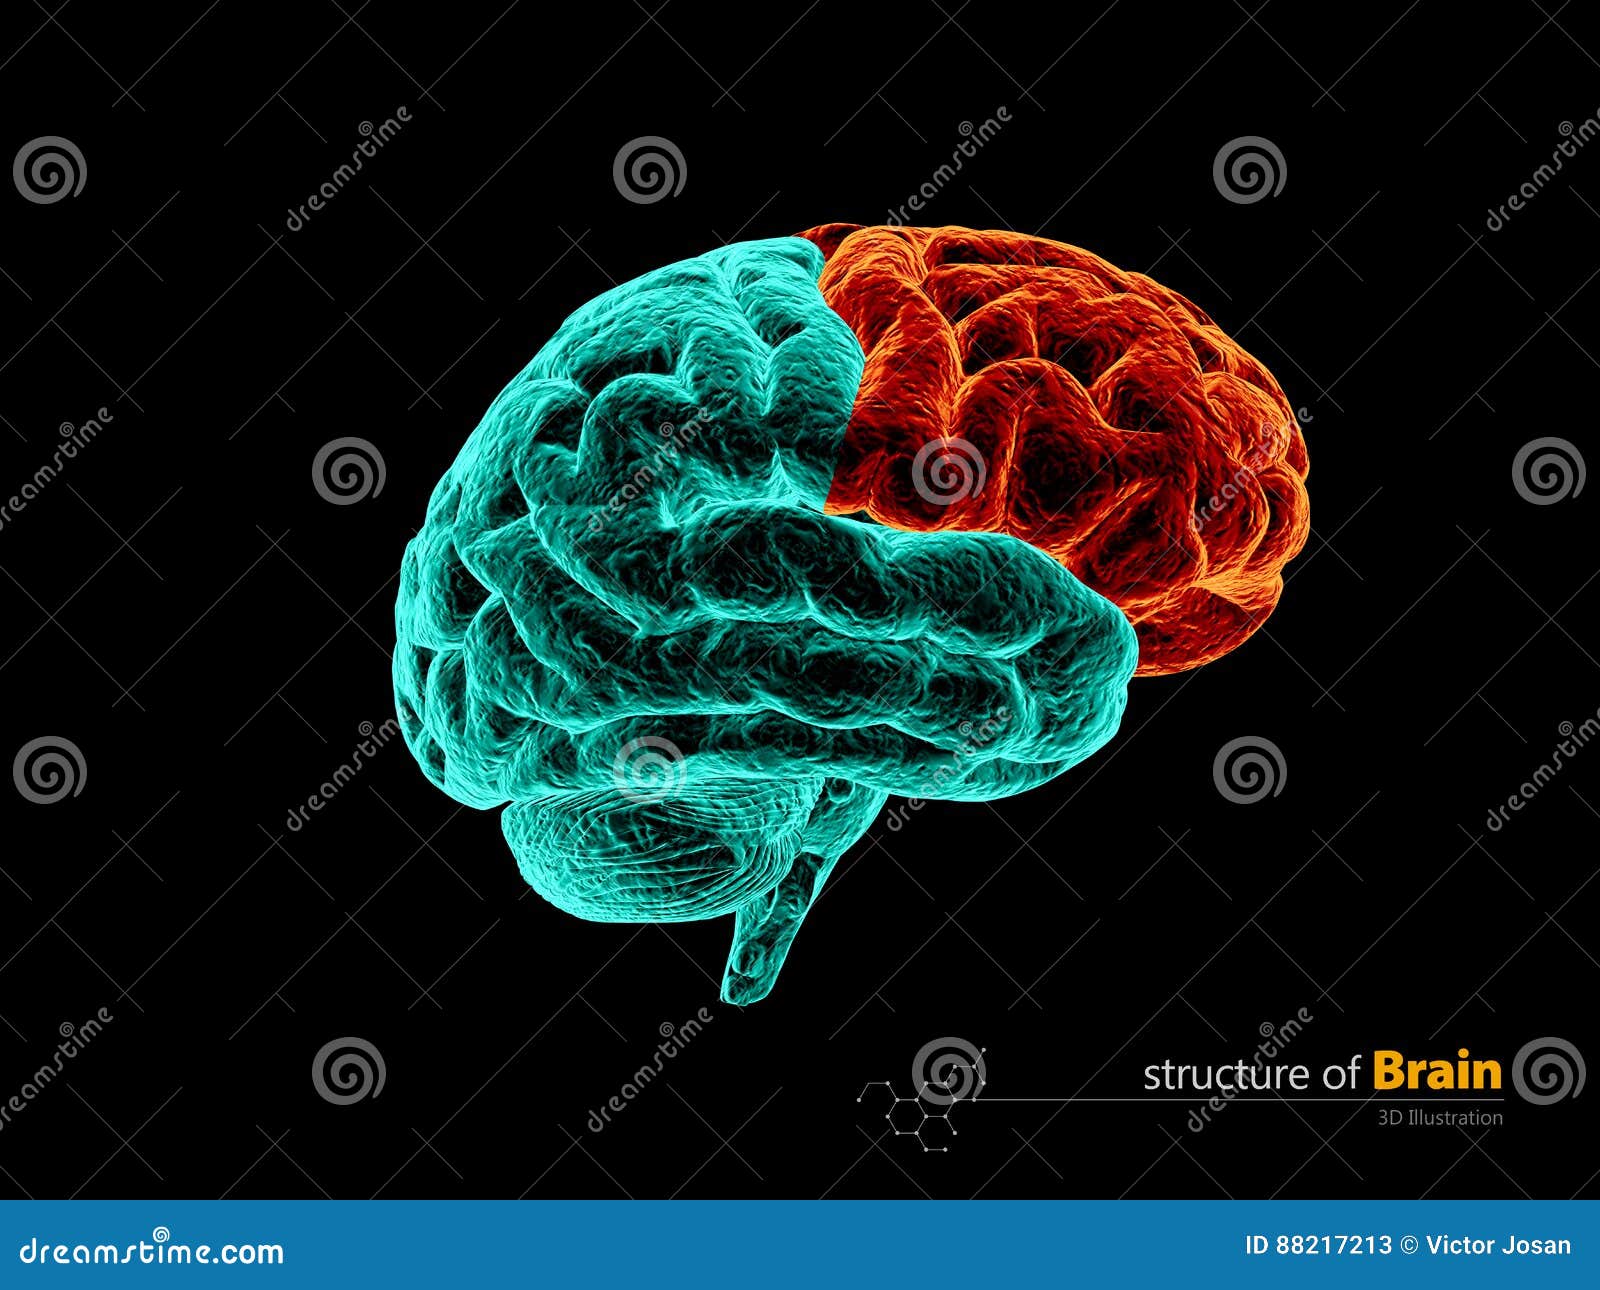 human brain, frontal lobe anatomy structure. human brain anatomy 3d .